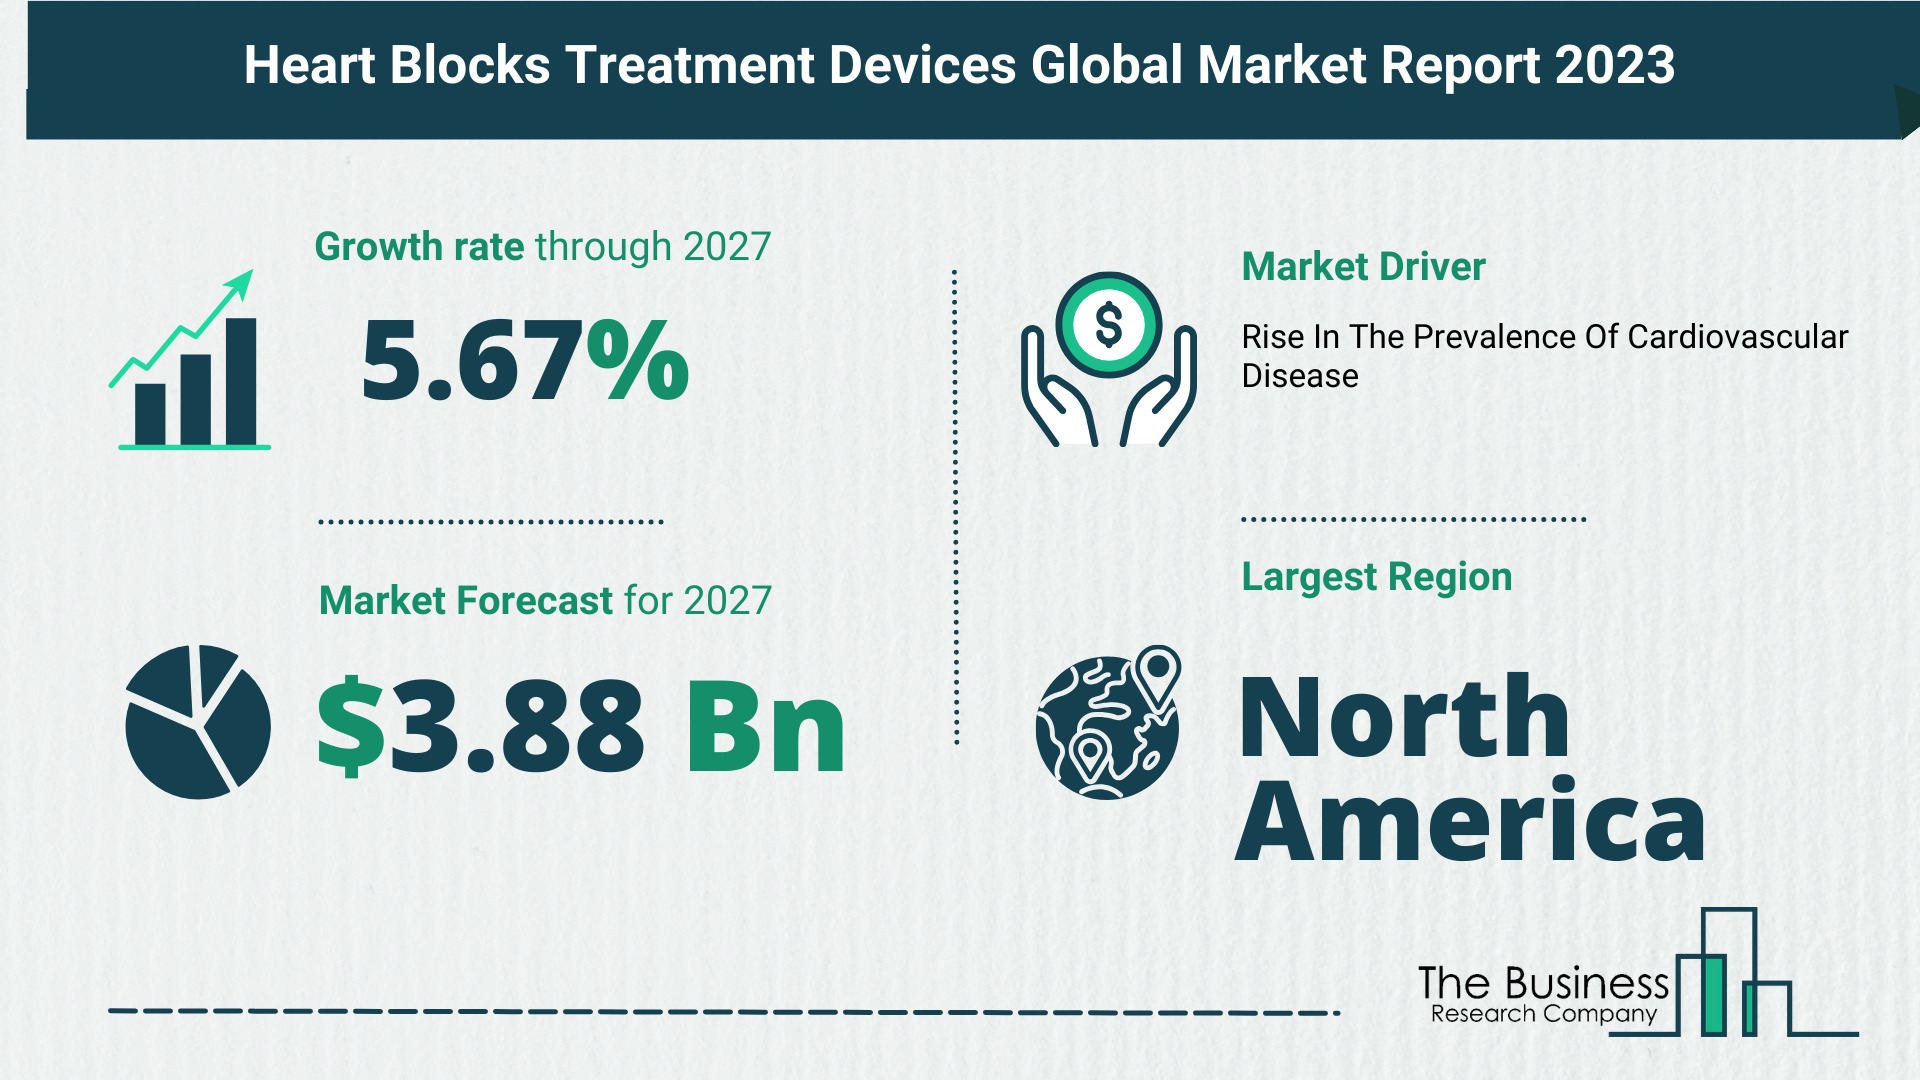 Global Heart Blocks Treatment Devices Market